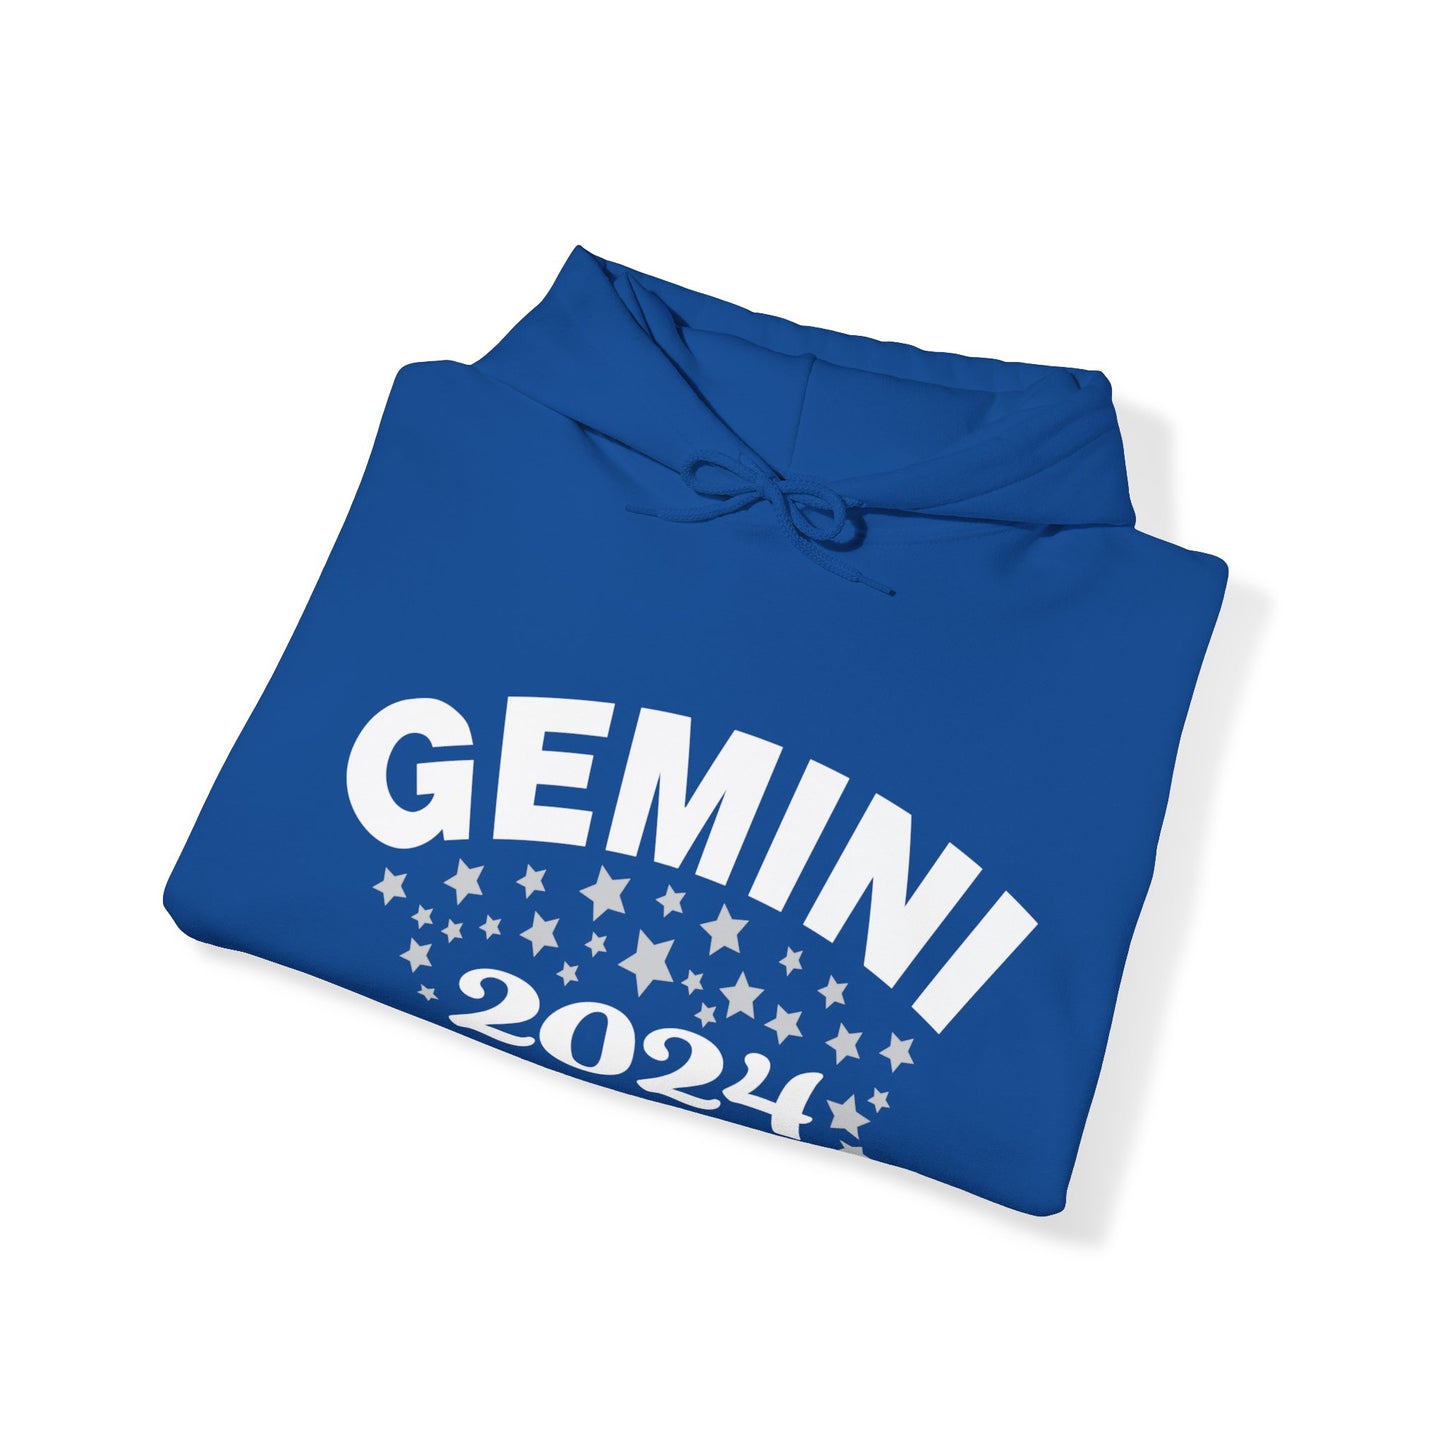 Gemini Hooded Sweatshirt 2024